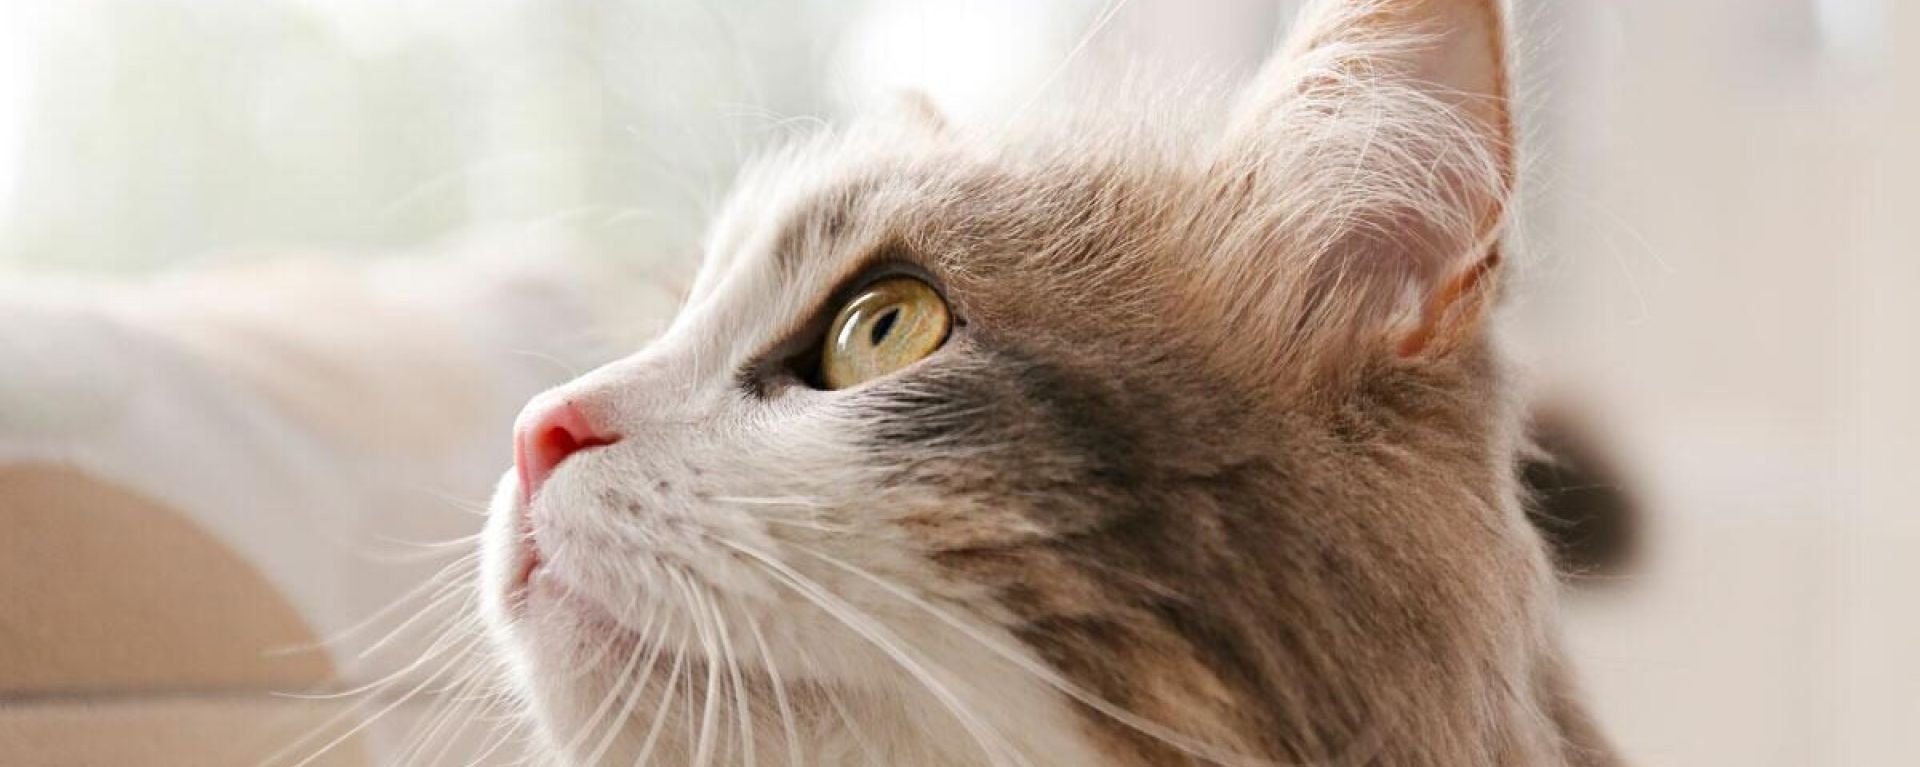 Правда о кошачьих аллергенах